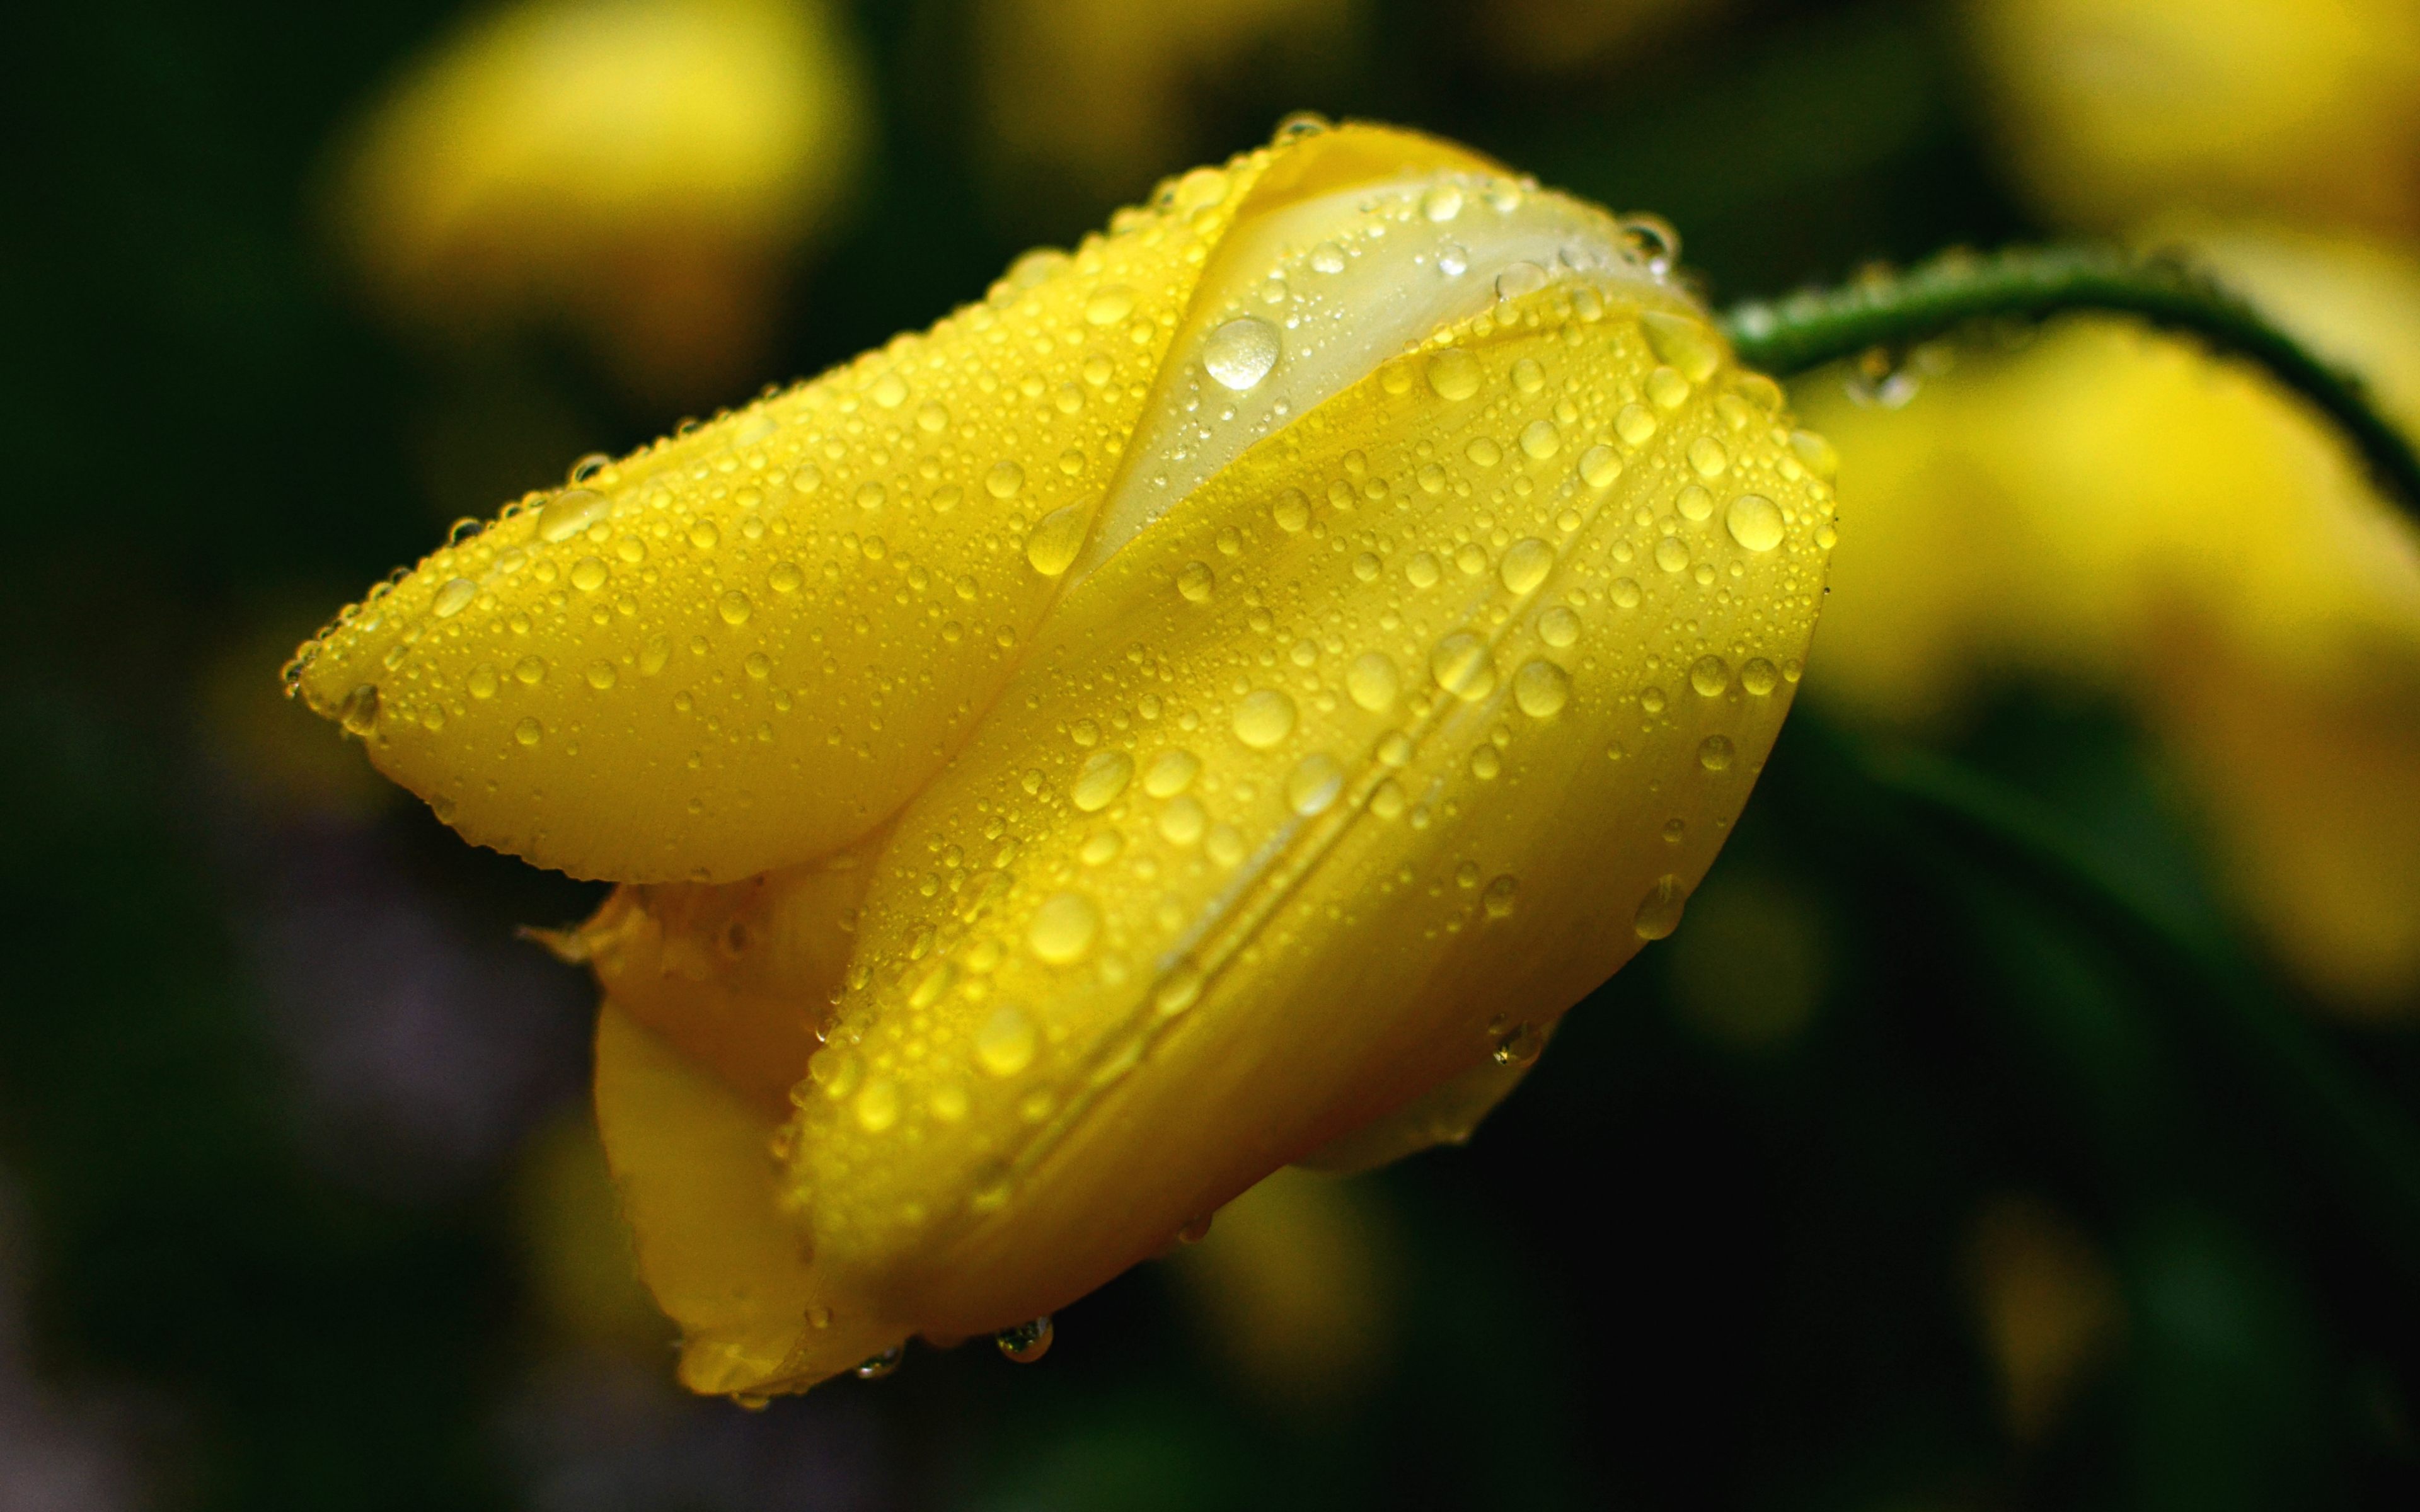 Flower Yellow Tulip With Drops Water 4k Wallpaper Download For Desktop